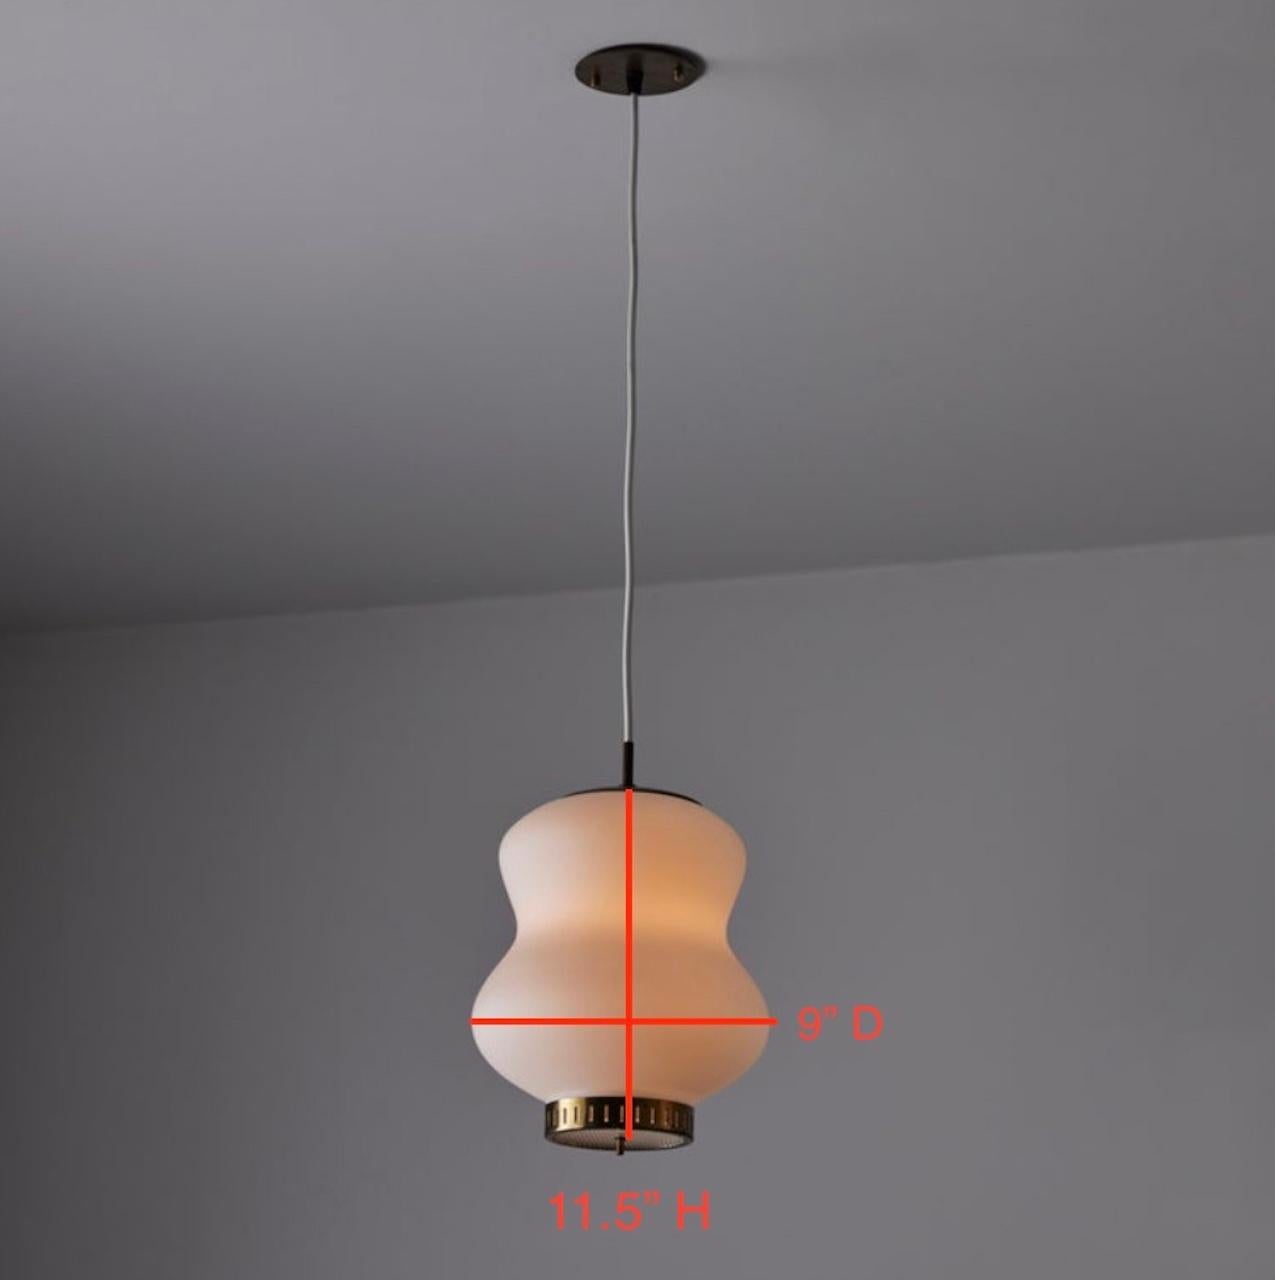 Suspension Ceiling Light by Stilnovo 10